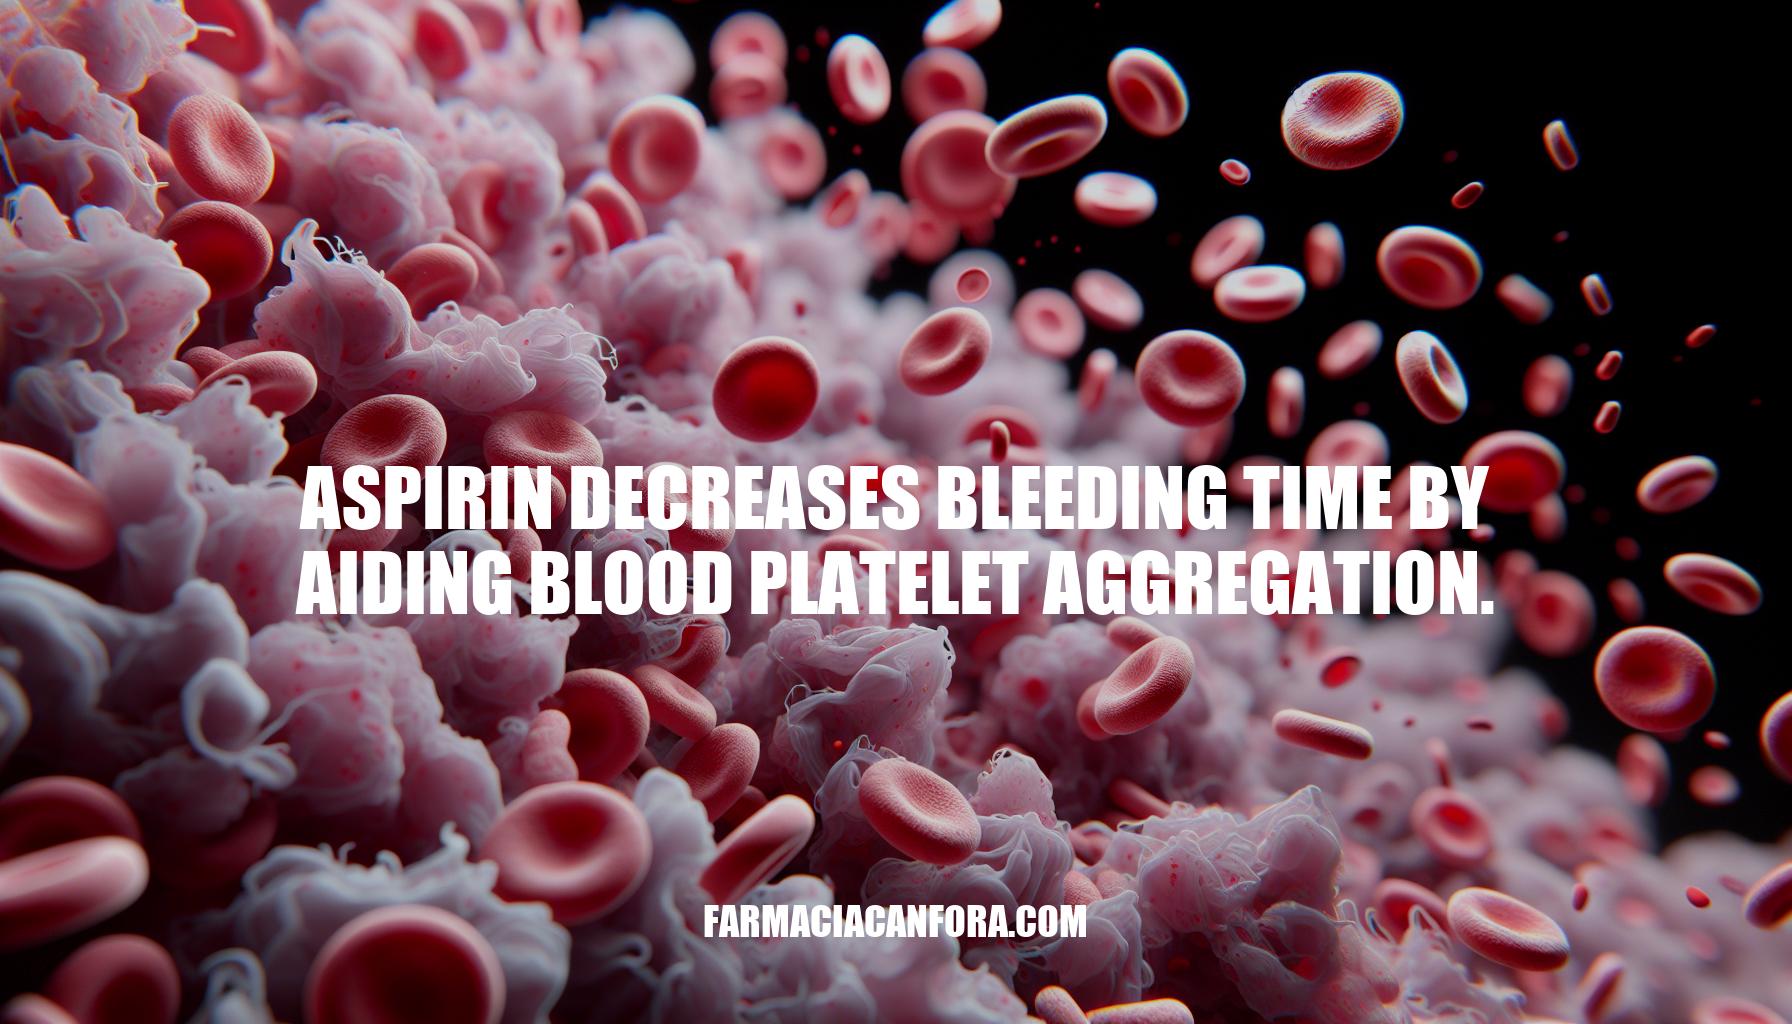 Aspirin's Role in Decreasing Bleeding Time through Platelet Aggregation